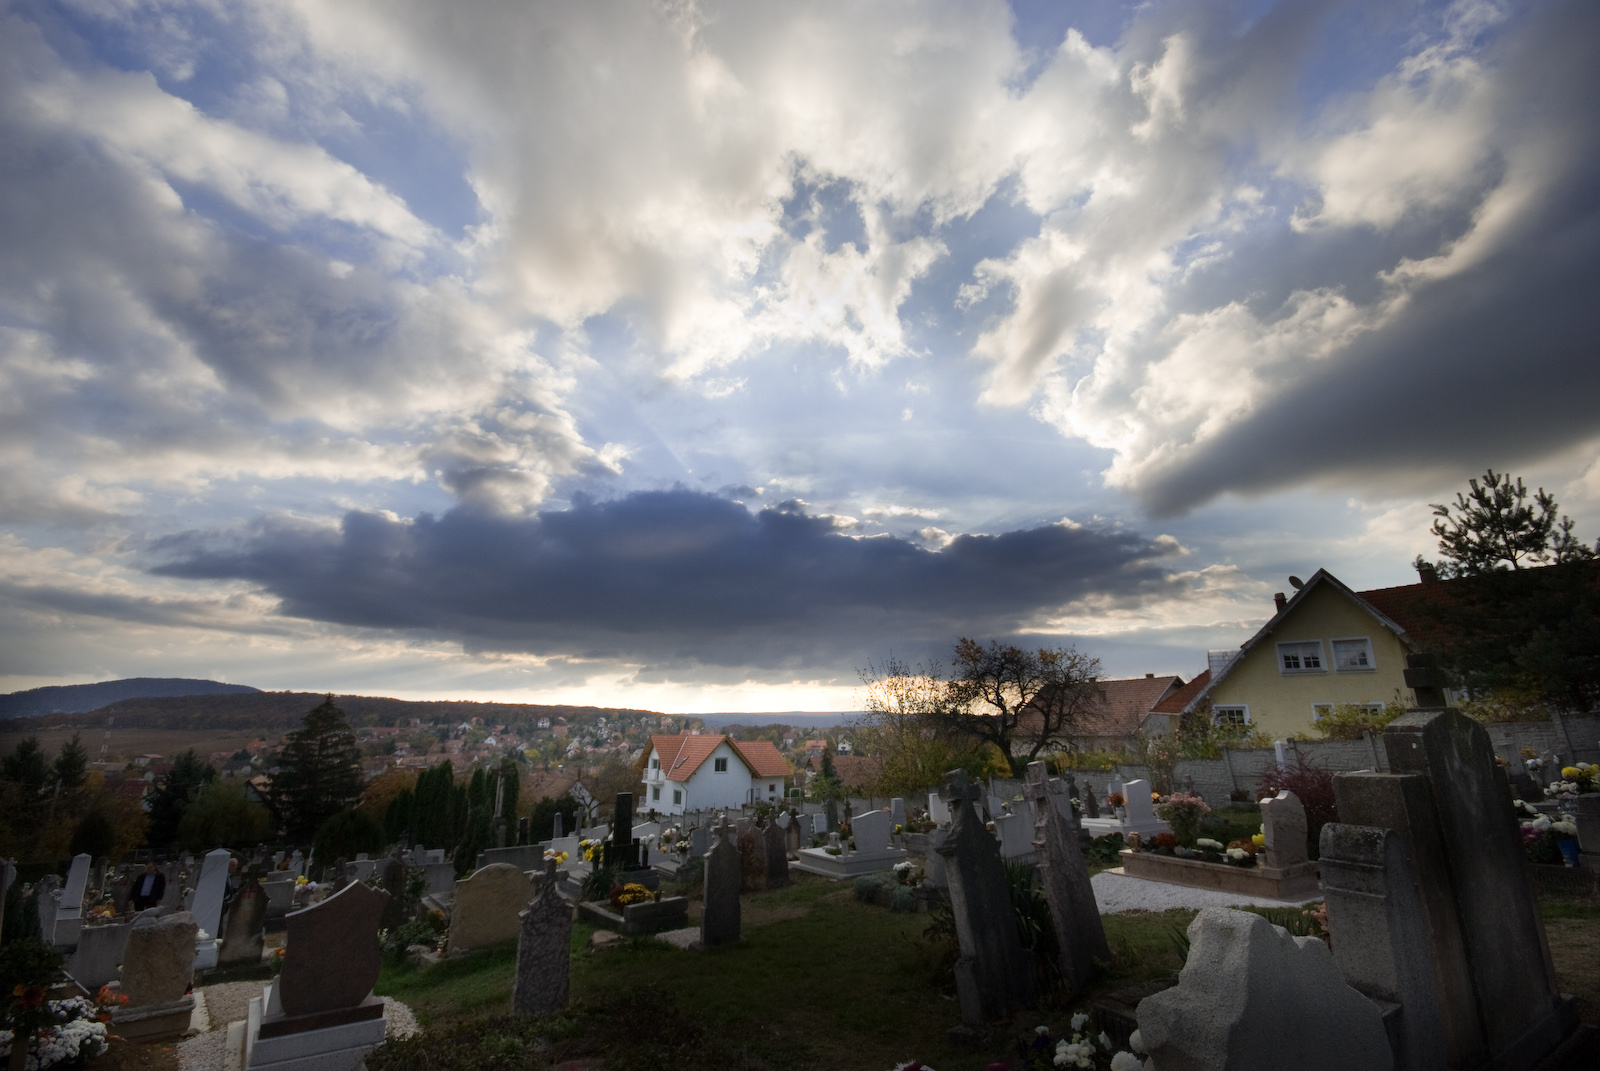 DSC 4427 Pilisborosjenői temető